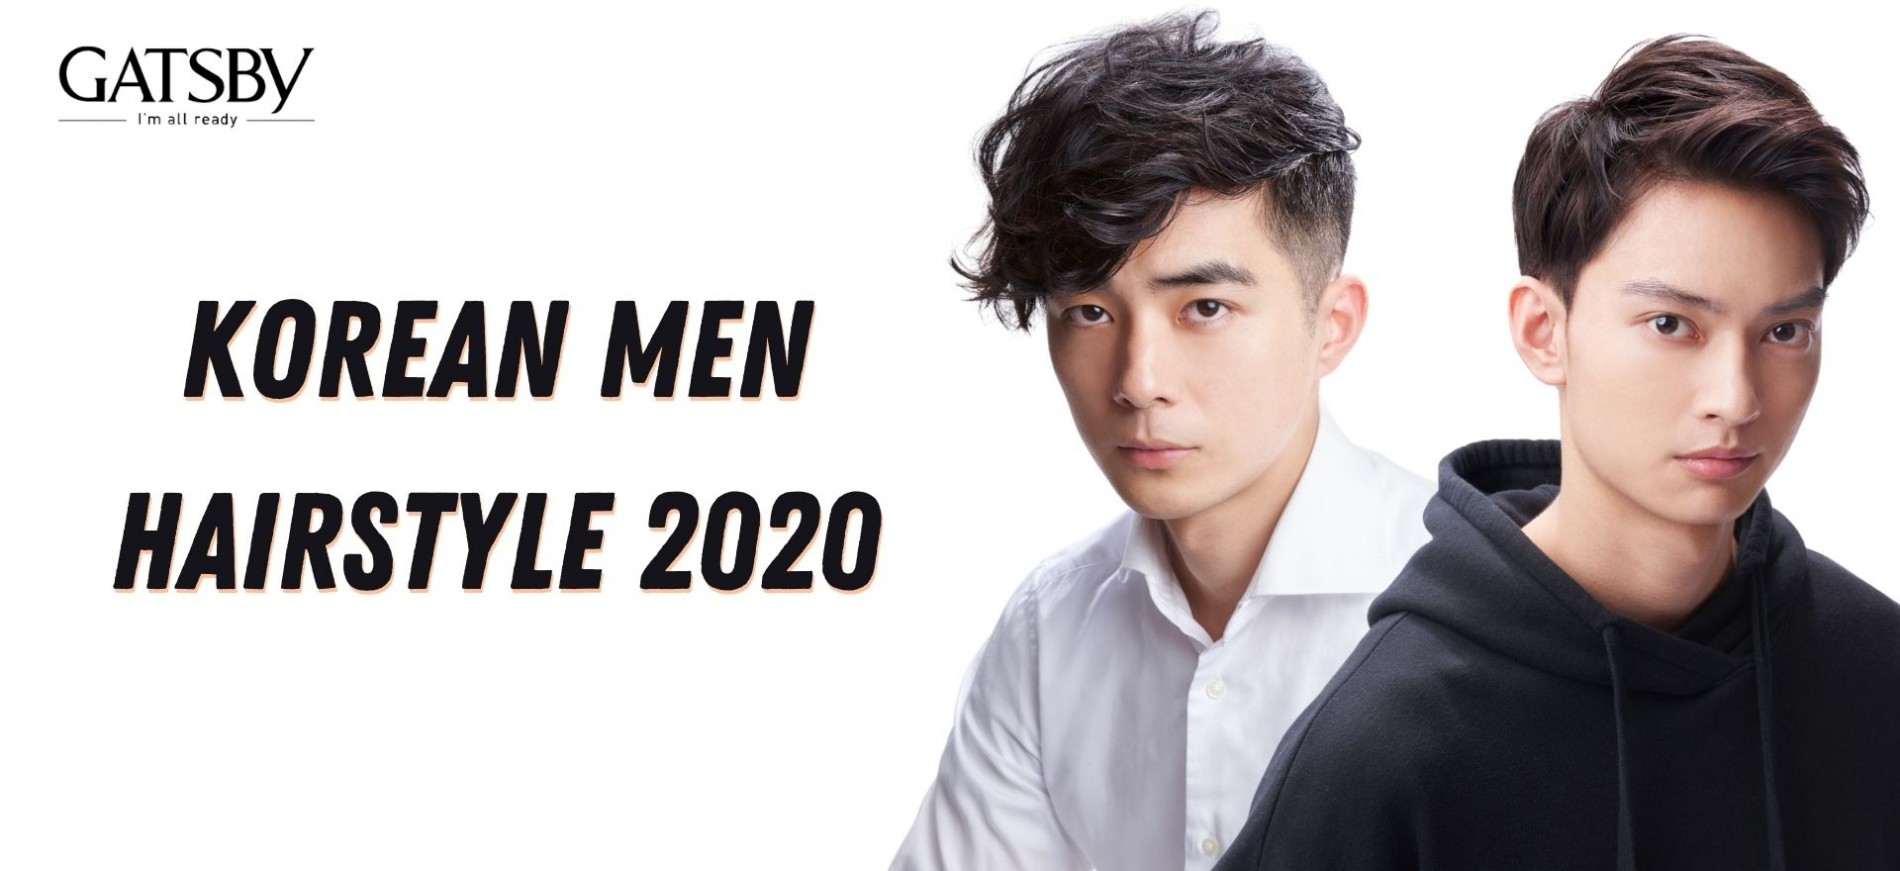 upload/assets/Korean Men Hairstyle 2020.jpg